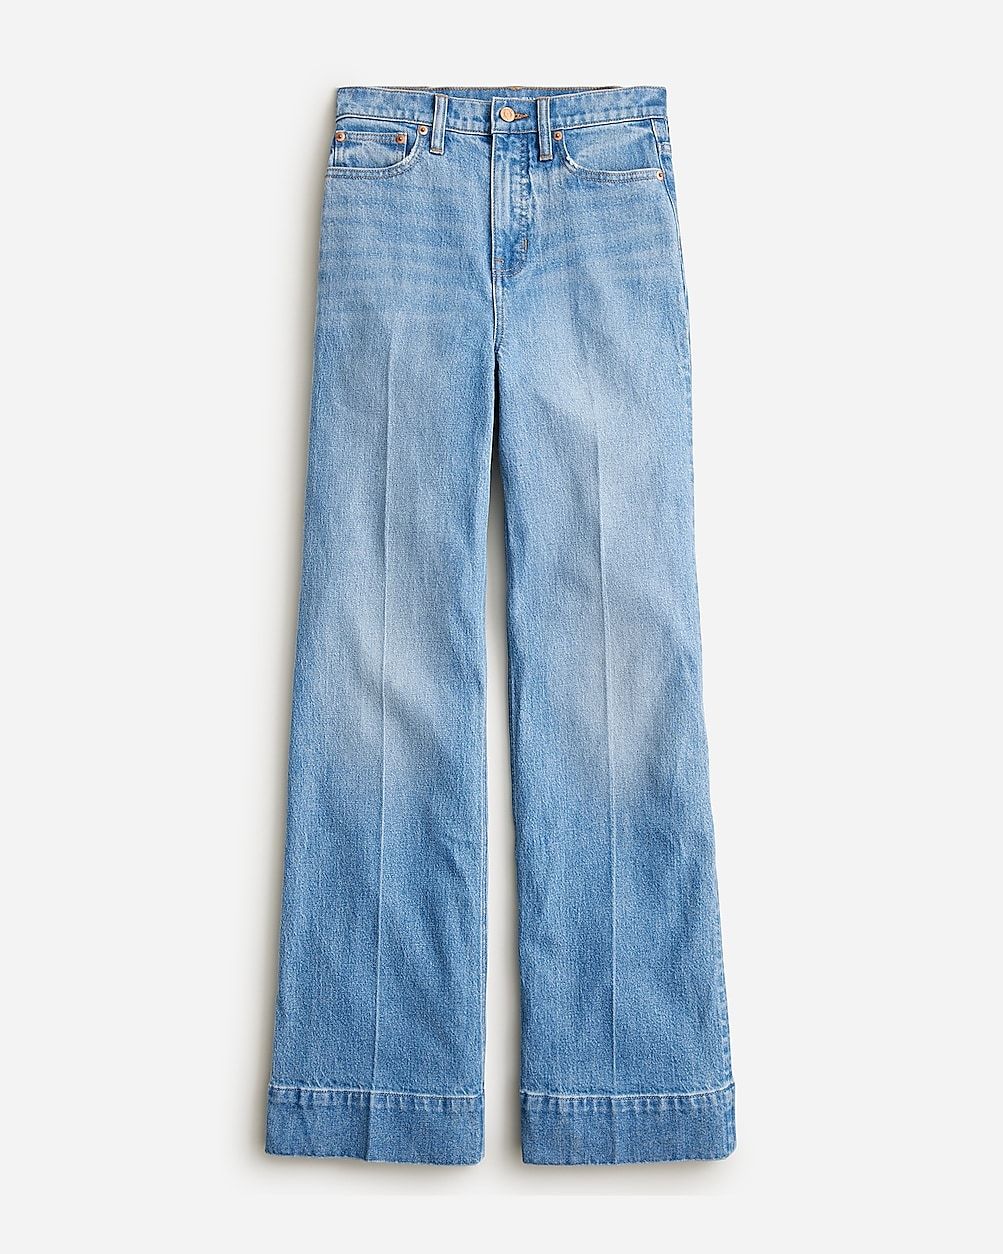 Tall denim trouser in Chambray blue wash | J.Crew US